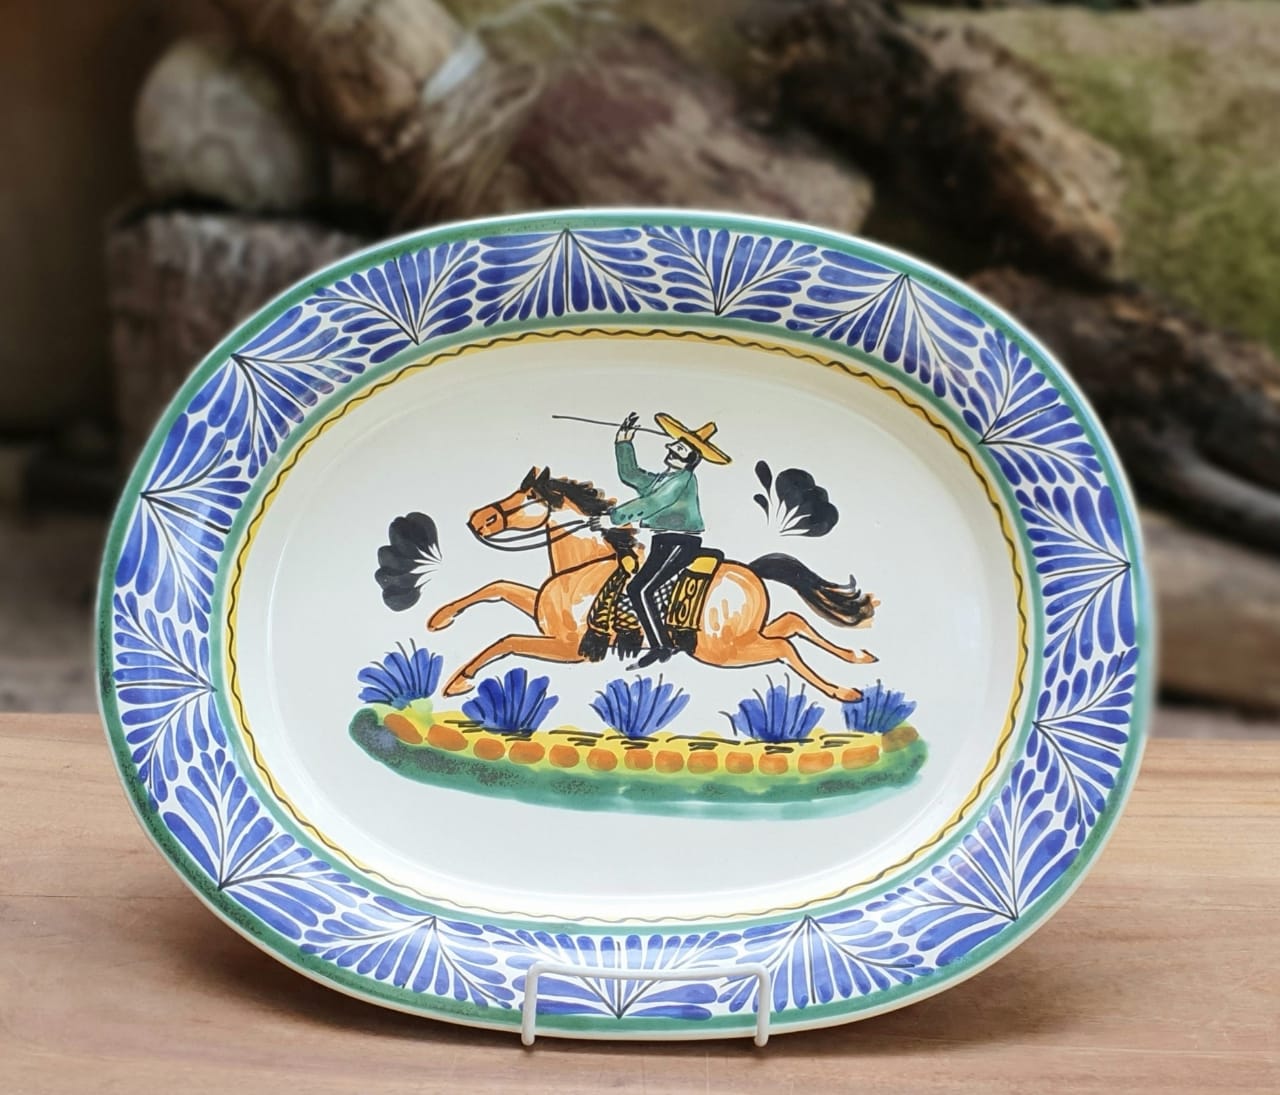 CowBoy Decorative / Serving Semi Oval Platter / Tray 16.9x13.4